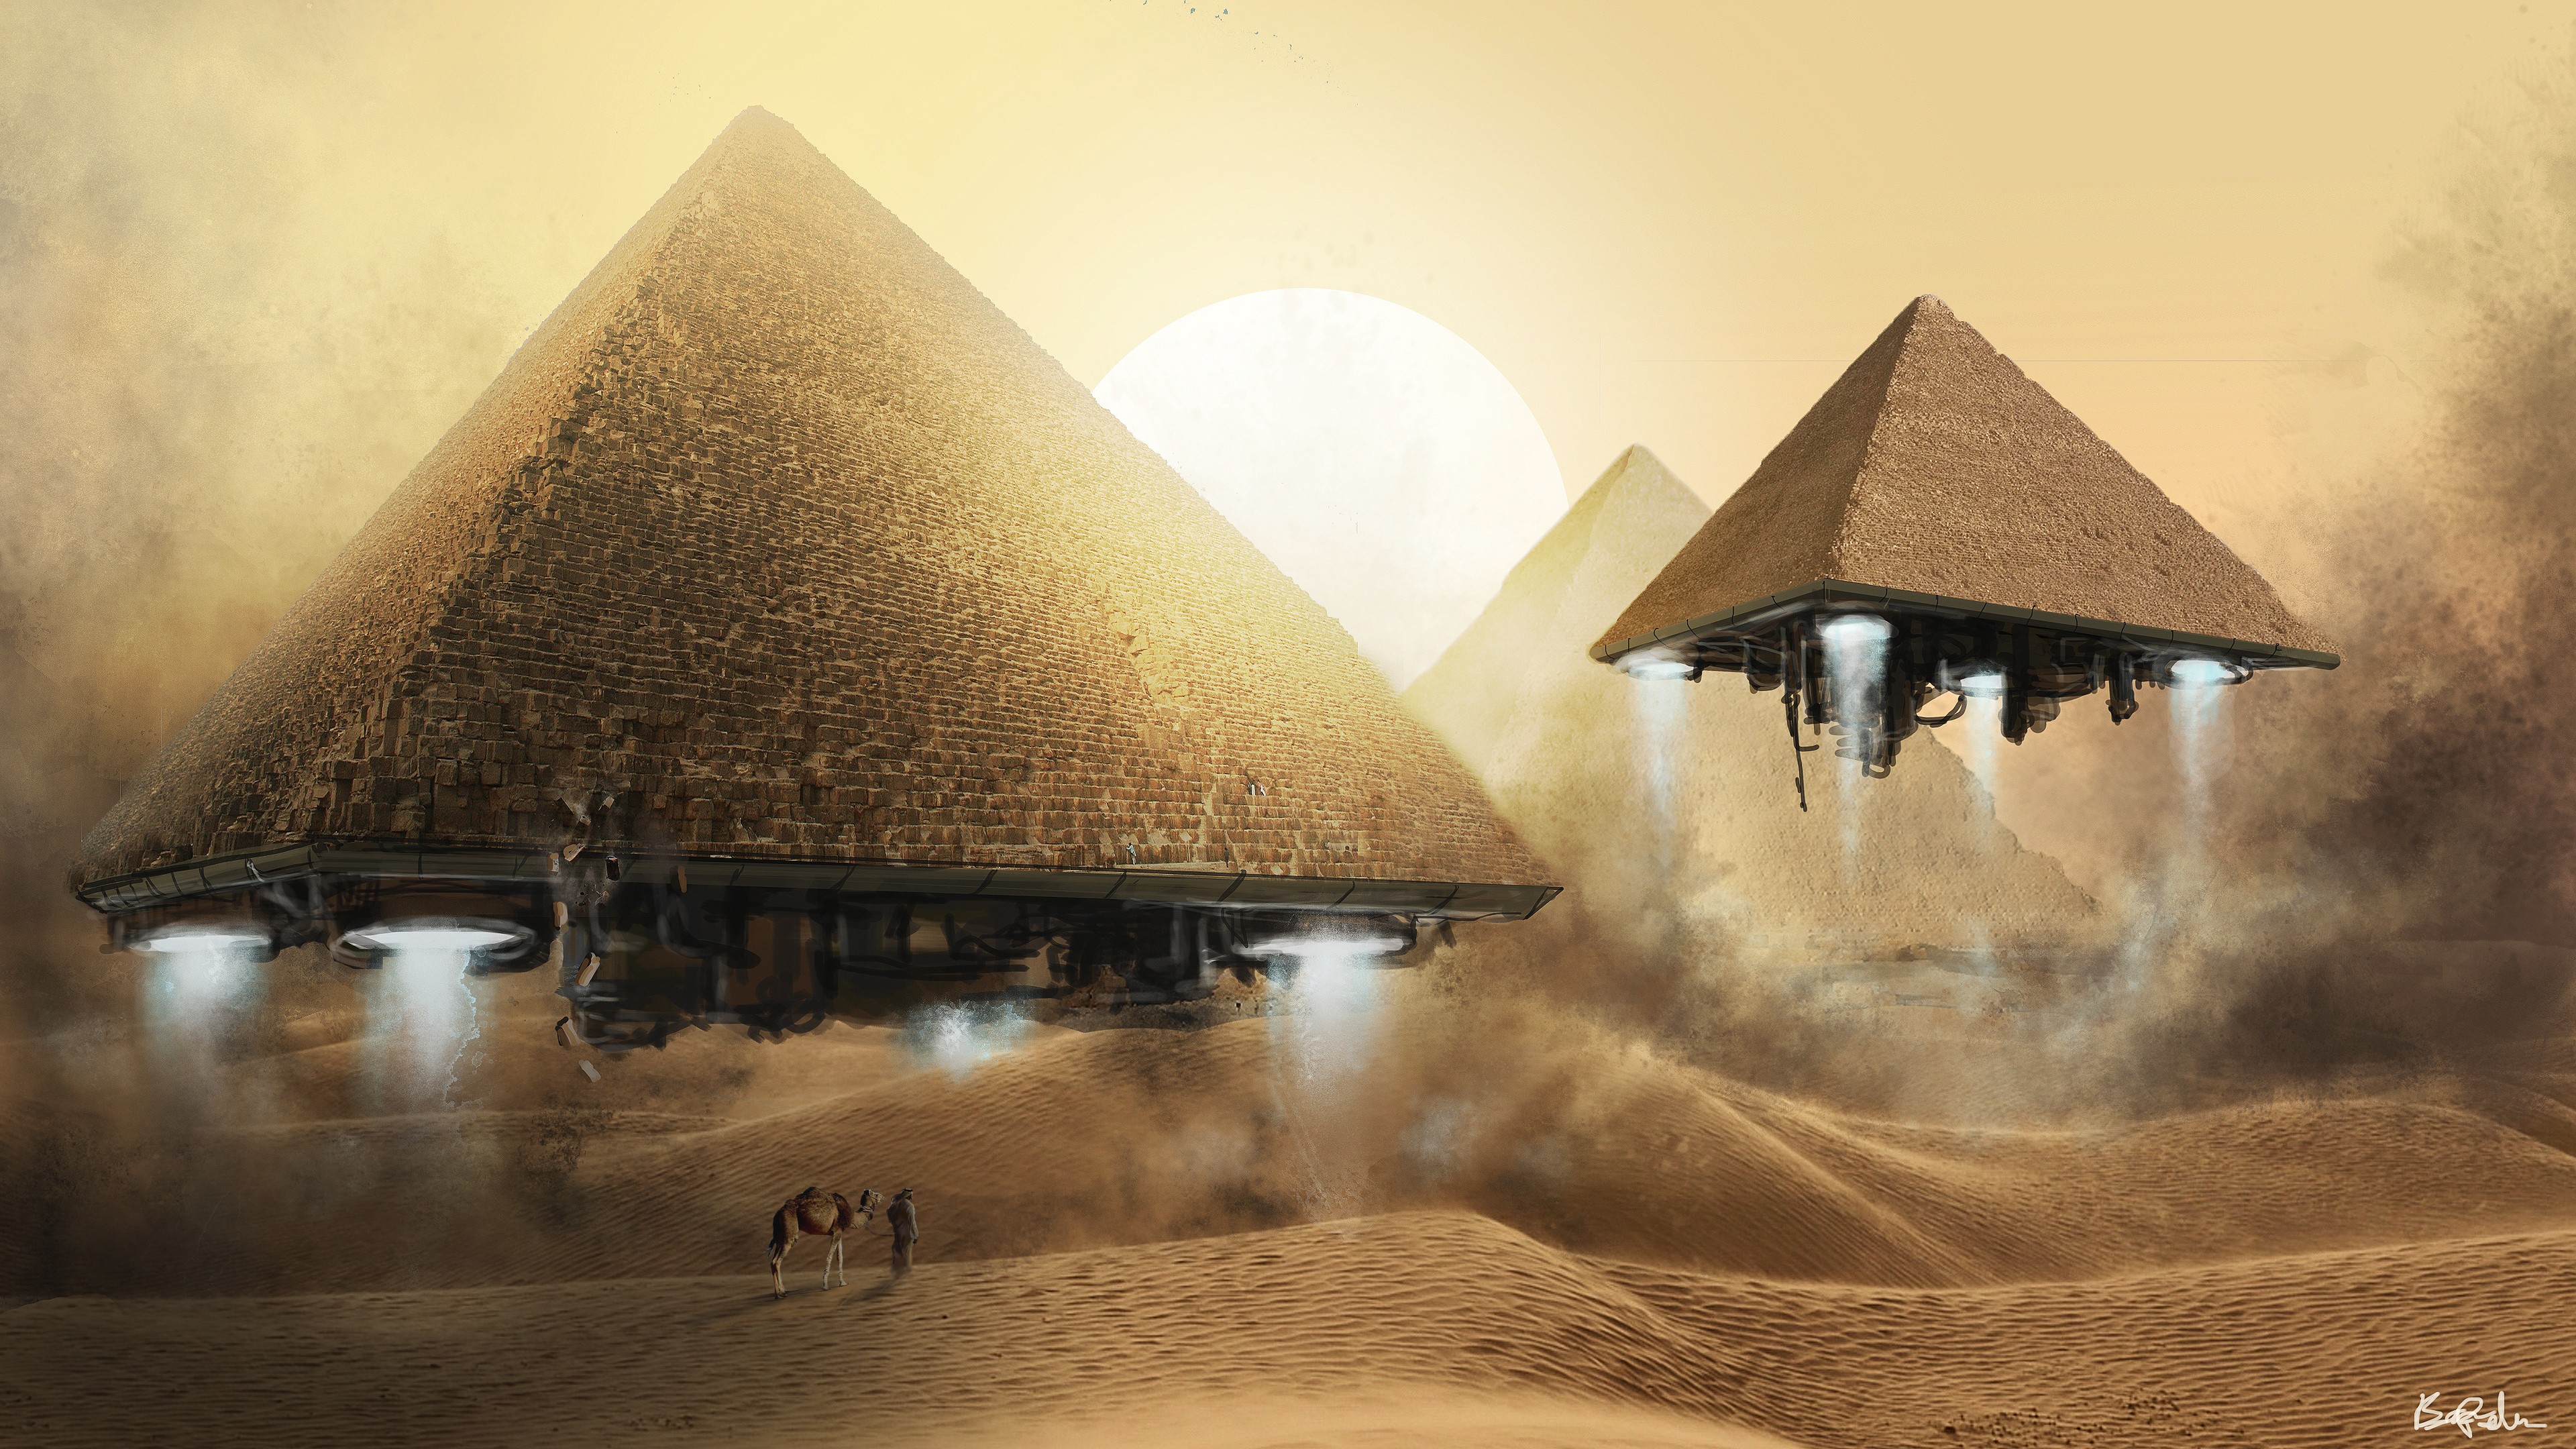 General 3840x2160 Stargate Egypt science fiction pyramid desert digital art dunes